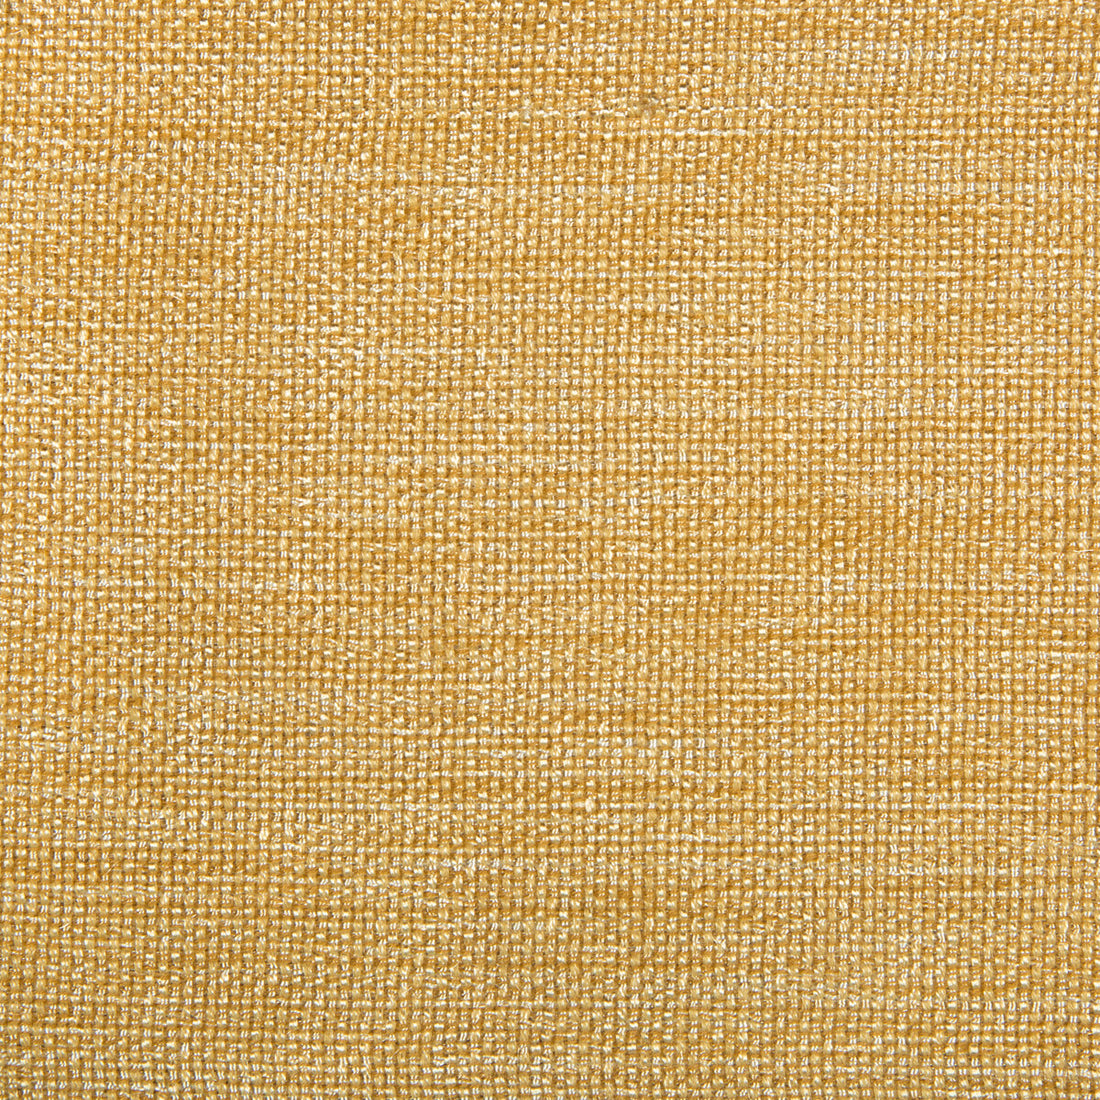 Kravet Smart fabric in 34939-4 color - pattern 34939.4.0 - by Kravet Smart